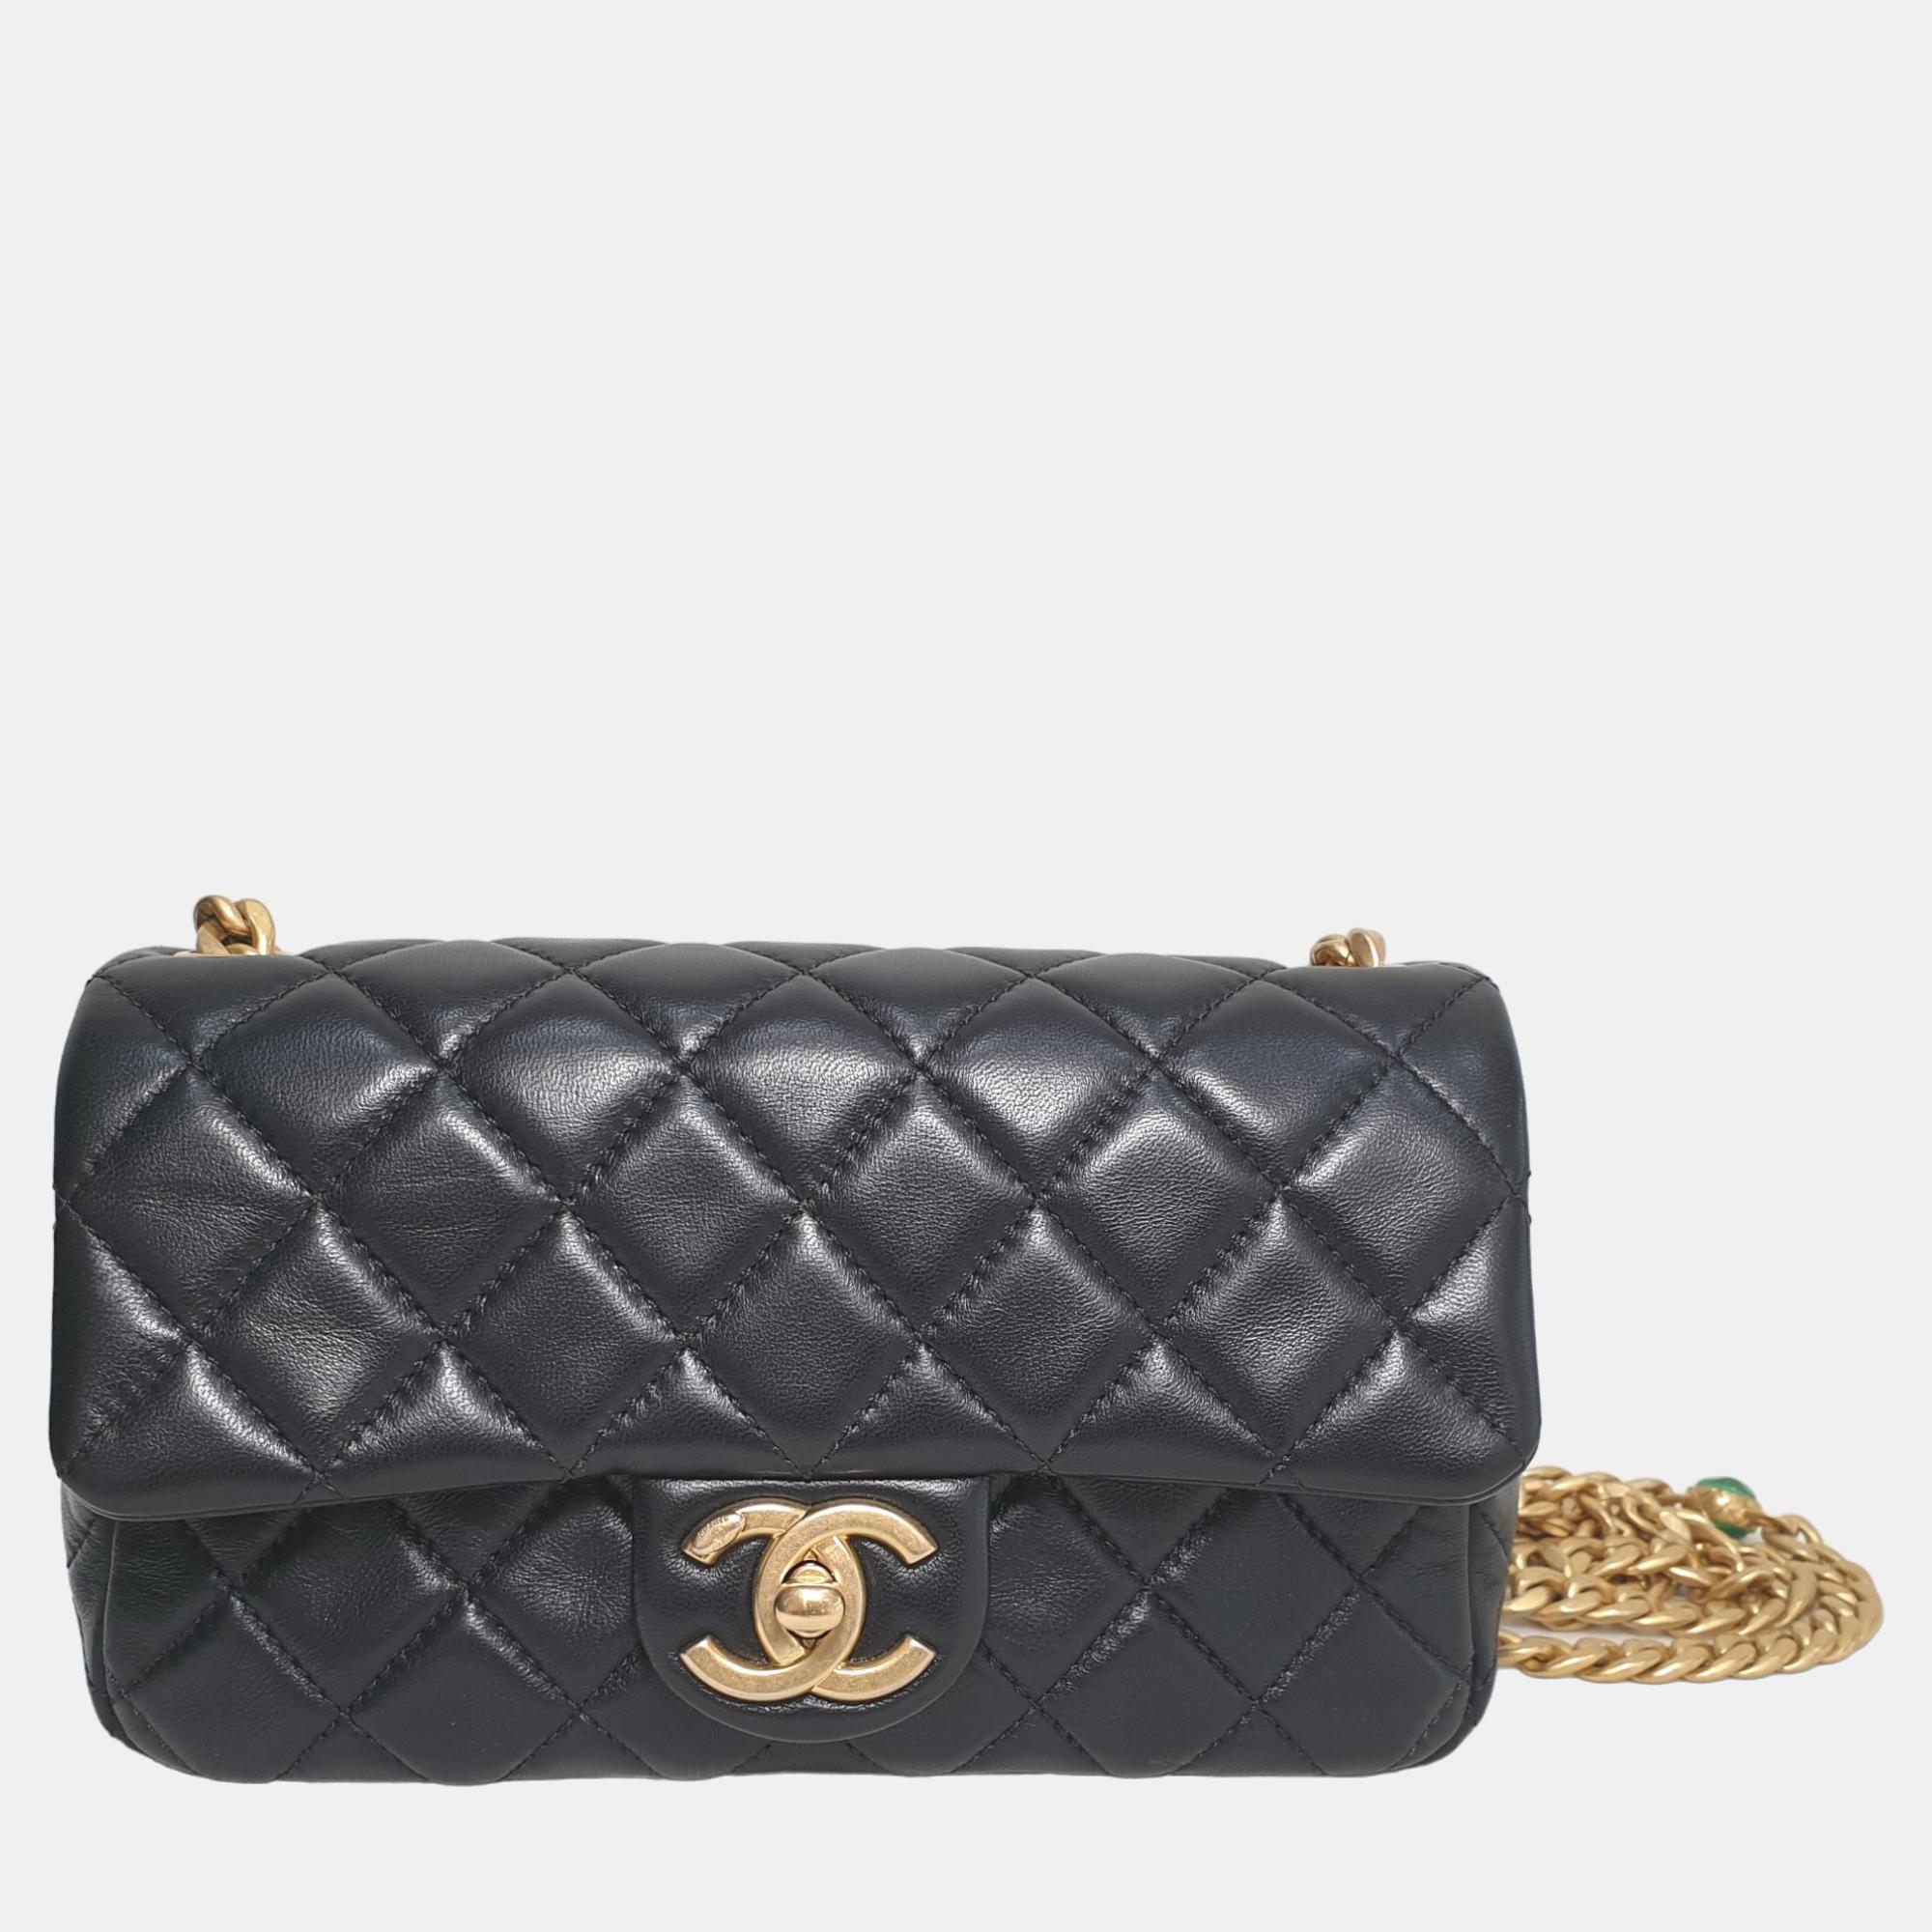 Chanel black lambskin leather rectangular mini flap shoulder bag